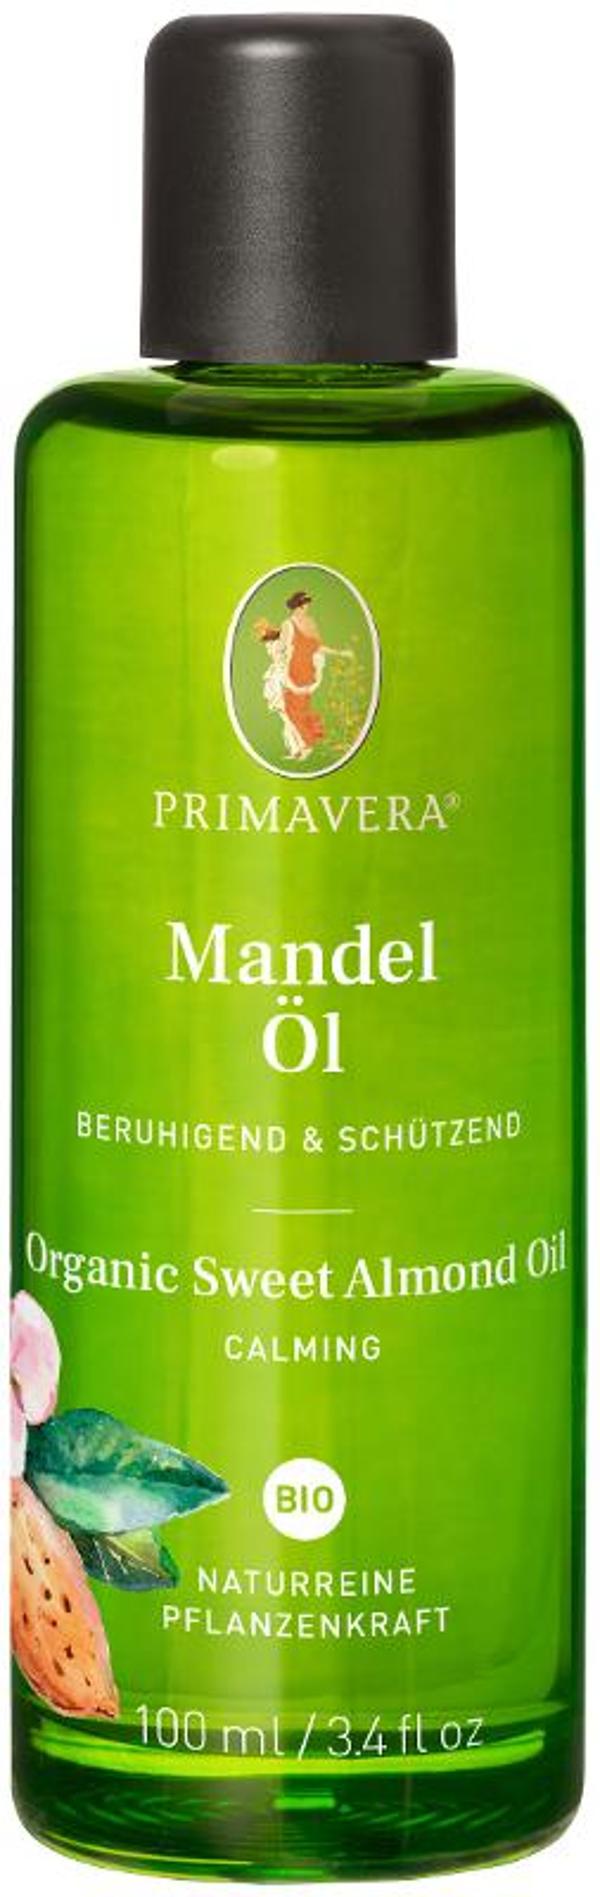 Produktfoto zu Mandelöl (100 ml)